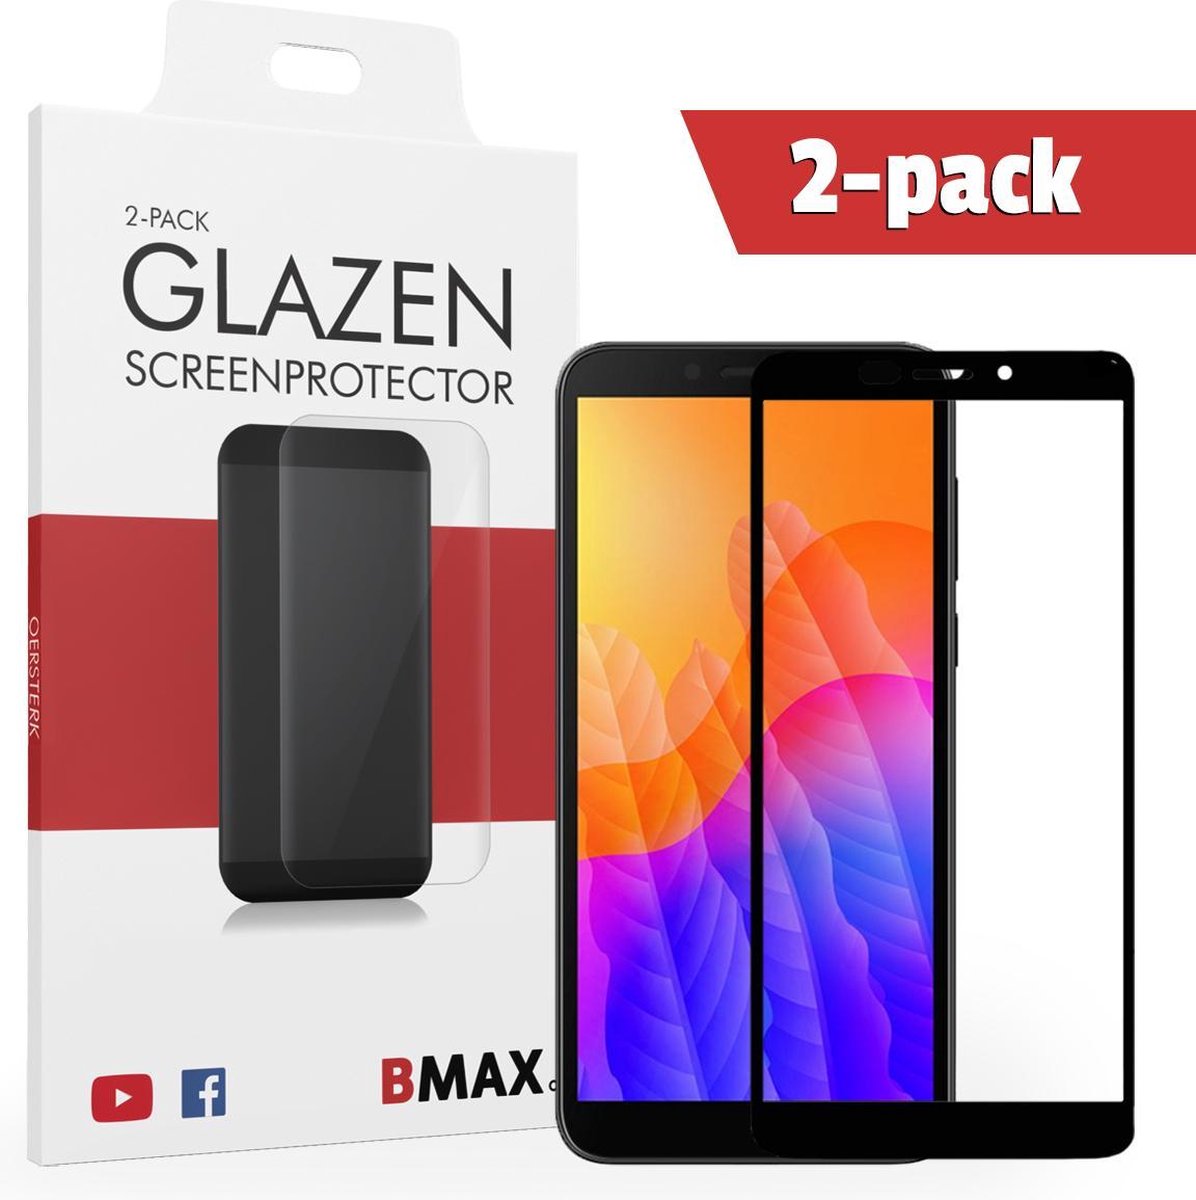 2-pack Bmax Huawei Y5p Screenprotector - Glass - Full Cover 2.5d - Black